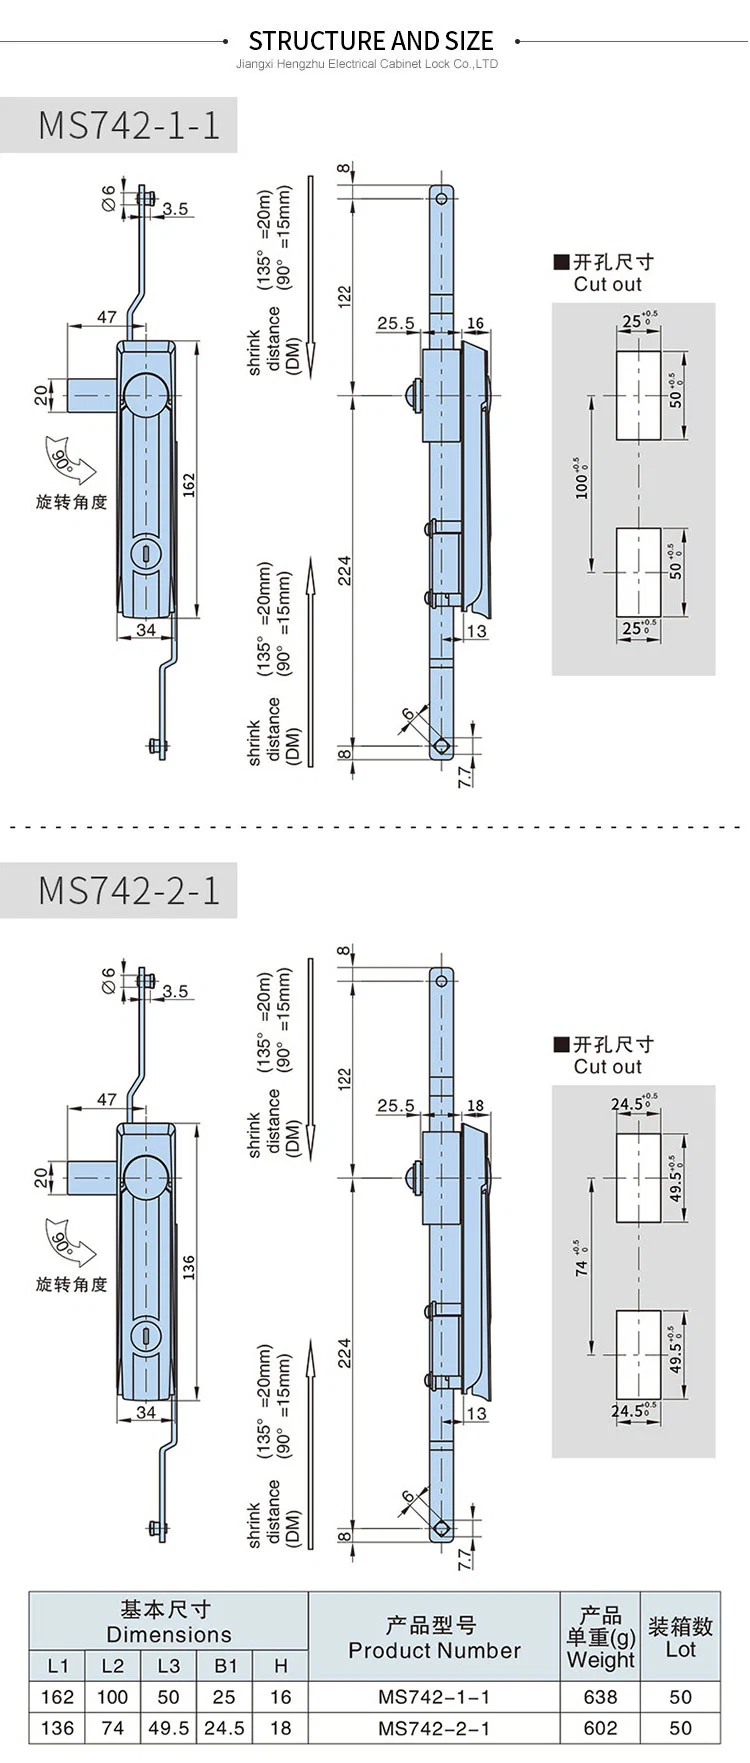 Ms742 Rod Control Swinghandle 3 Point Lock Metal Rod Contral Lock